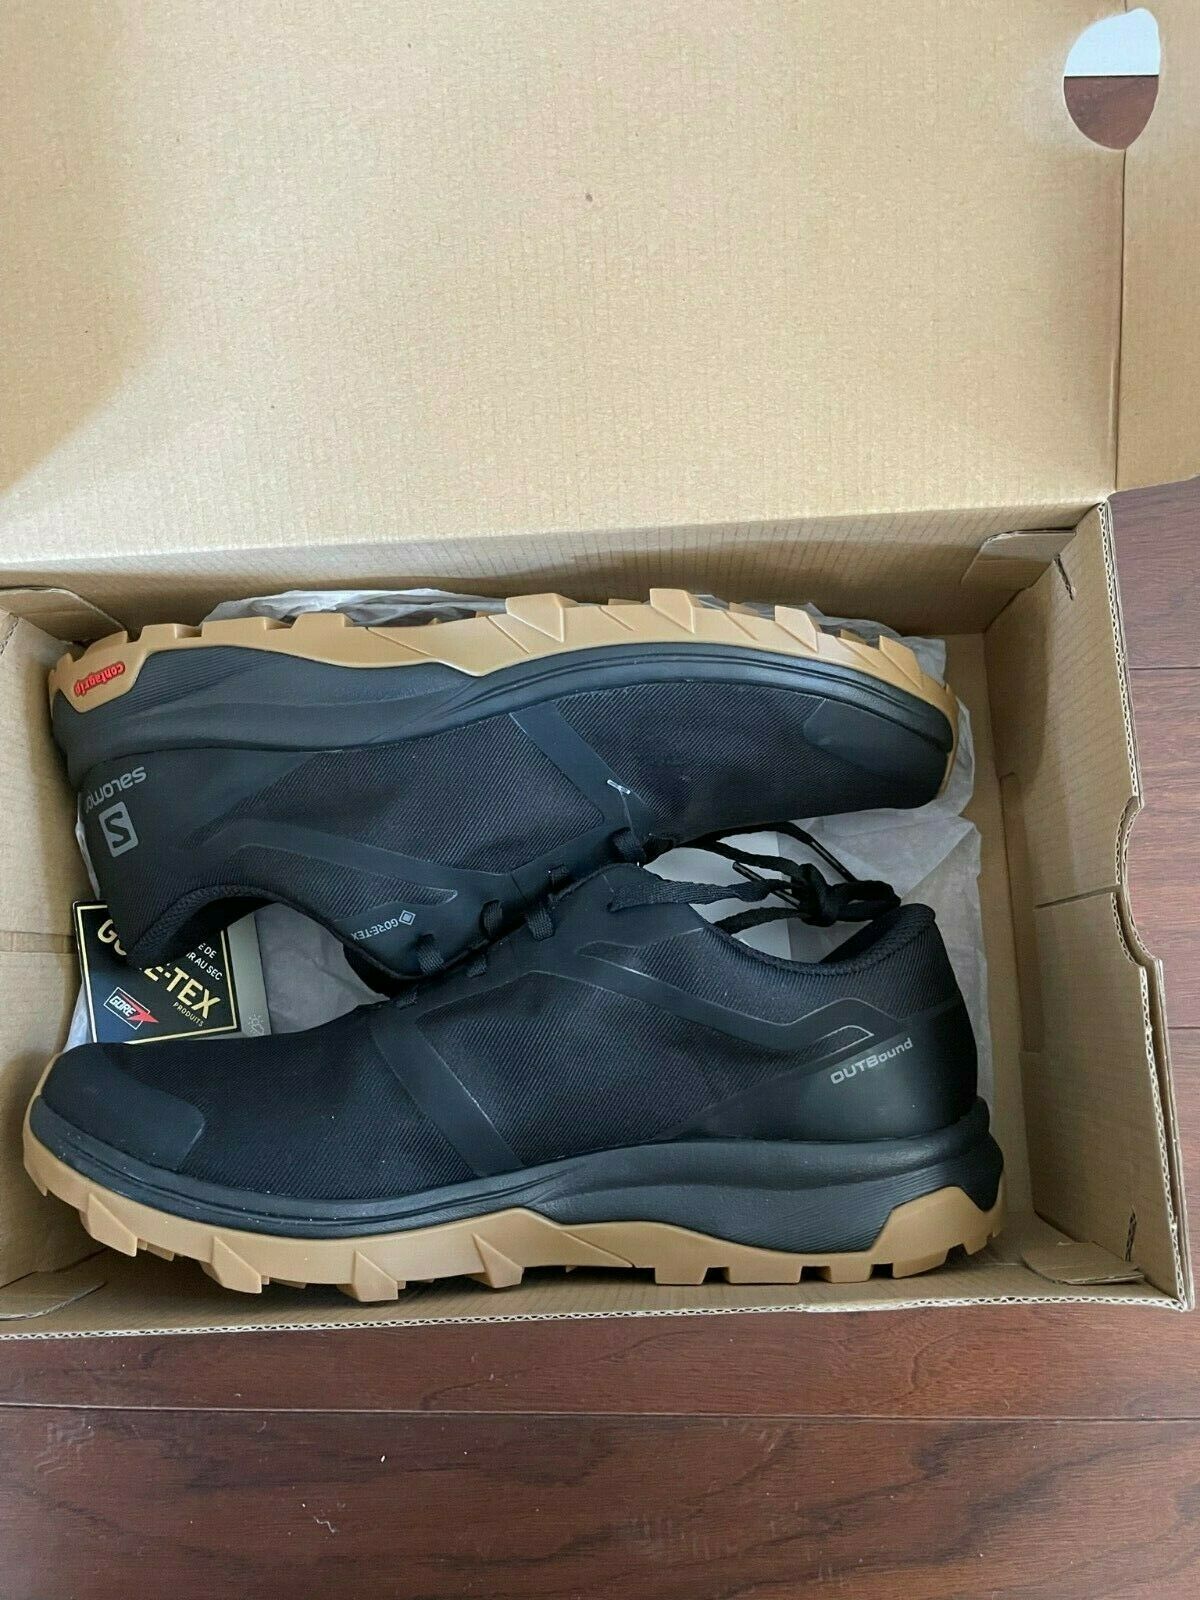 BNIB Salomon Outbound GTX Men's Hiking shoes, size 8.5, Black/Gum